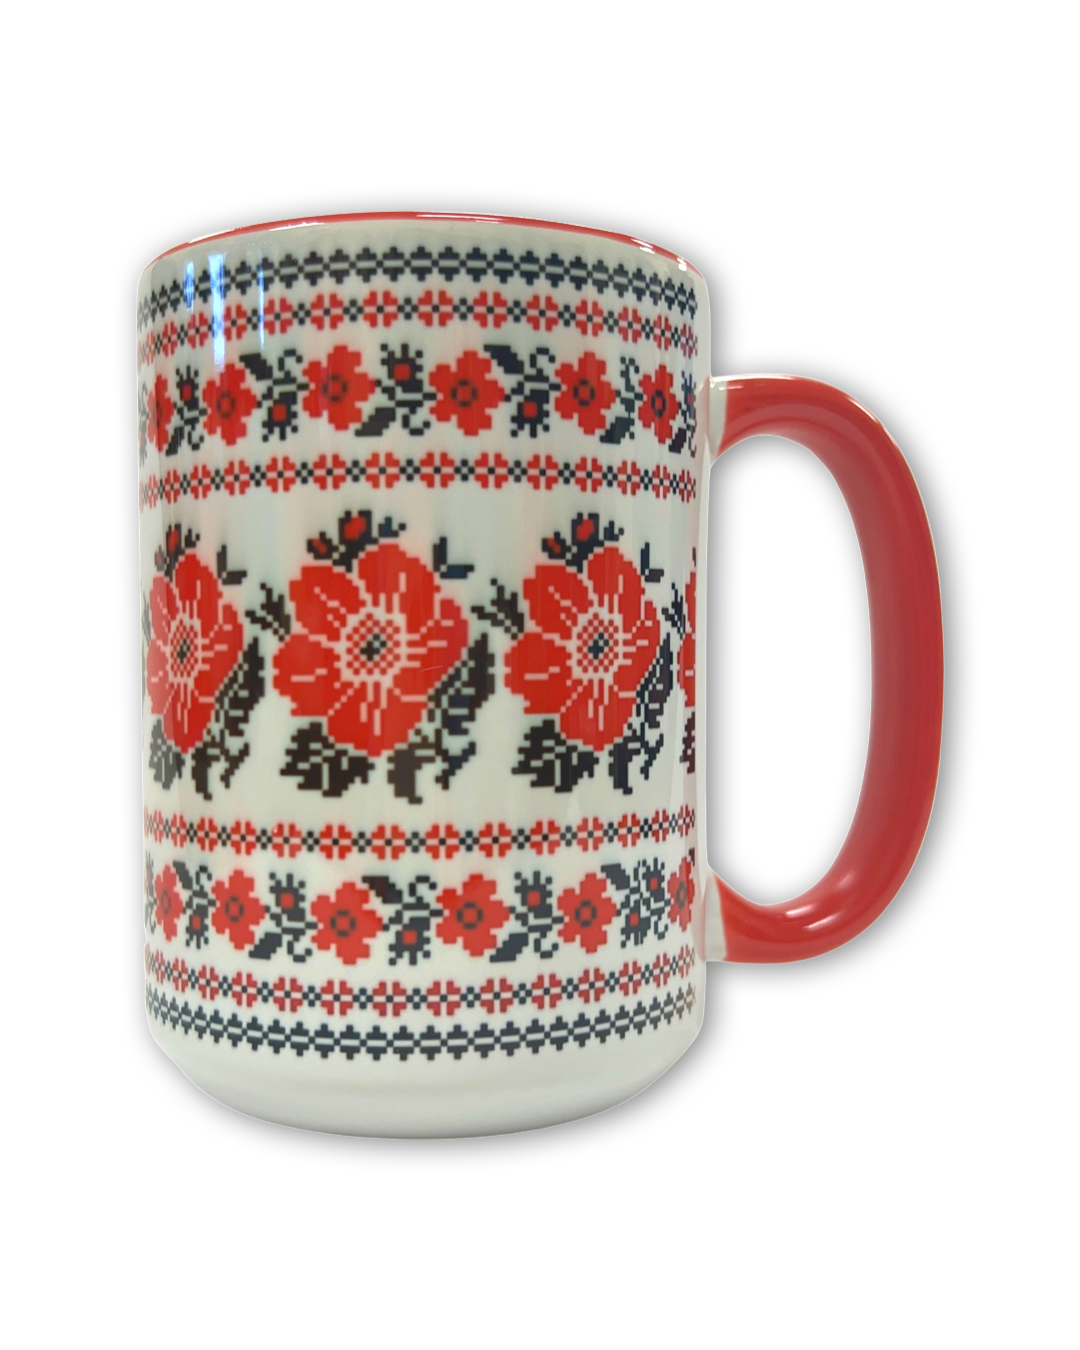 Customized premium red handle ceramic coffee mug 15 oz.